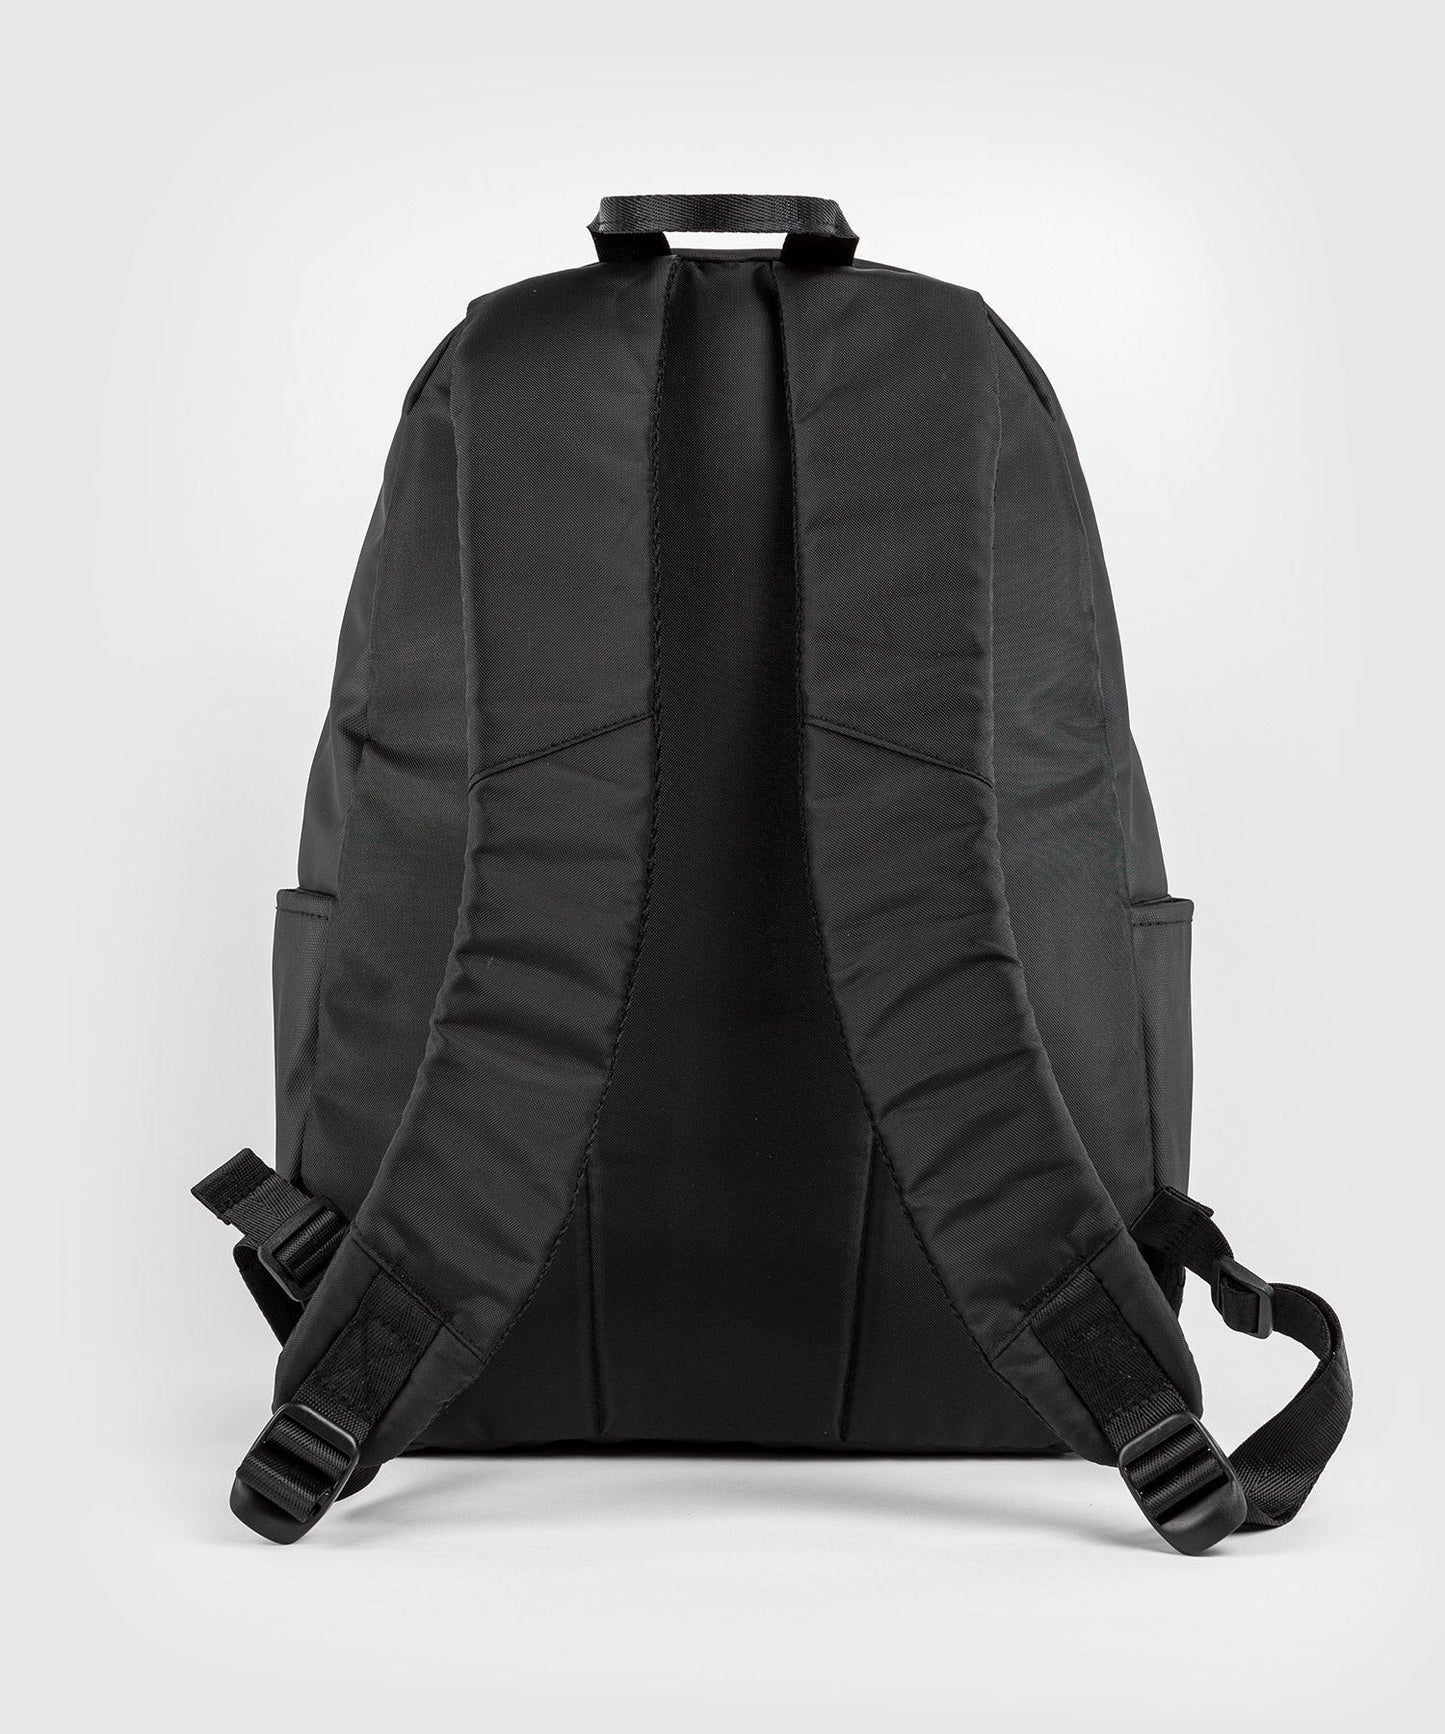 Venum Evo 2 Light Backpack - Black/Grey